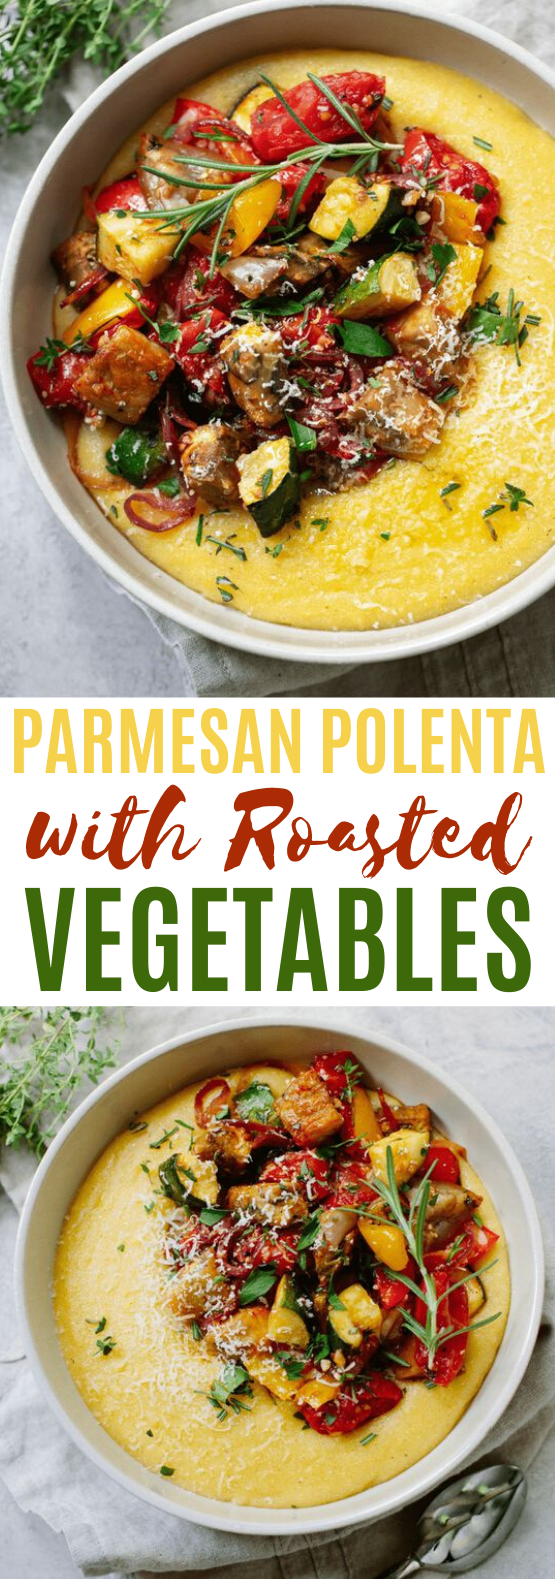 Parmesan Polenta with Roasted Vegetables #vegetarian #recipes #meatless #veggies #easy